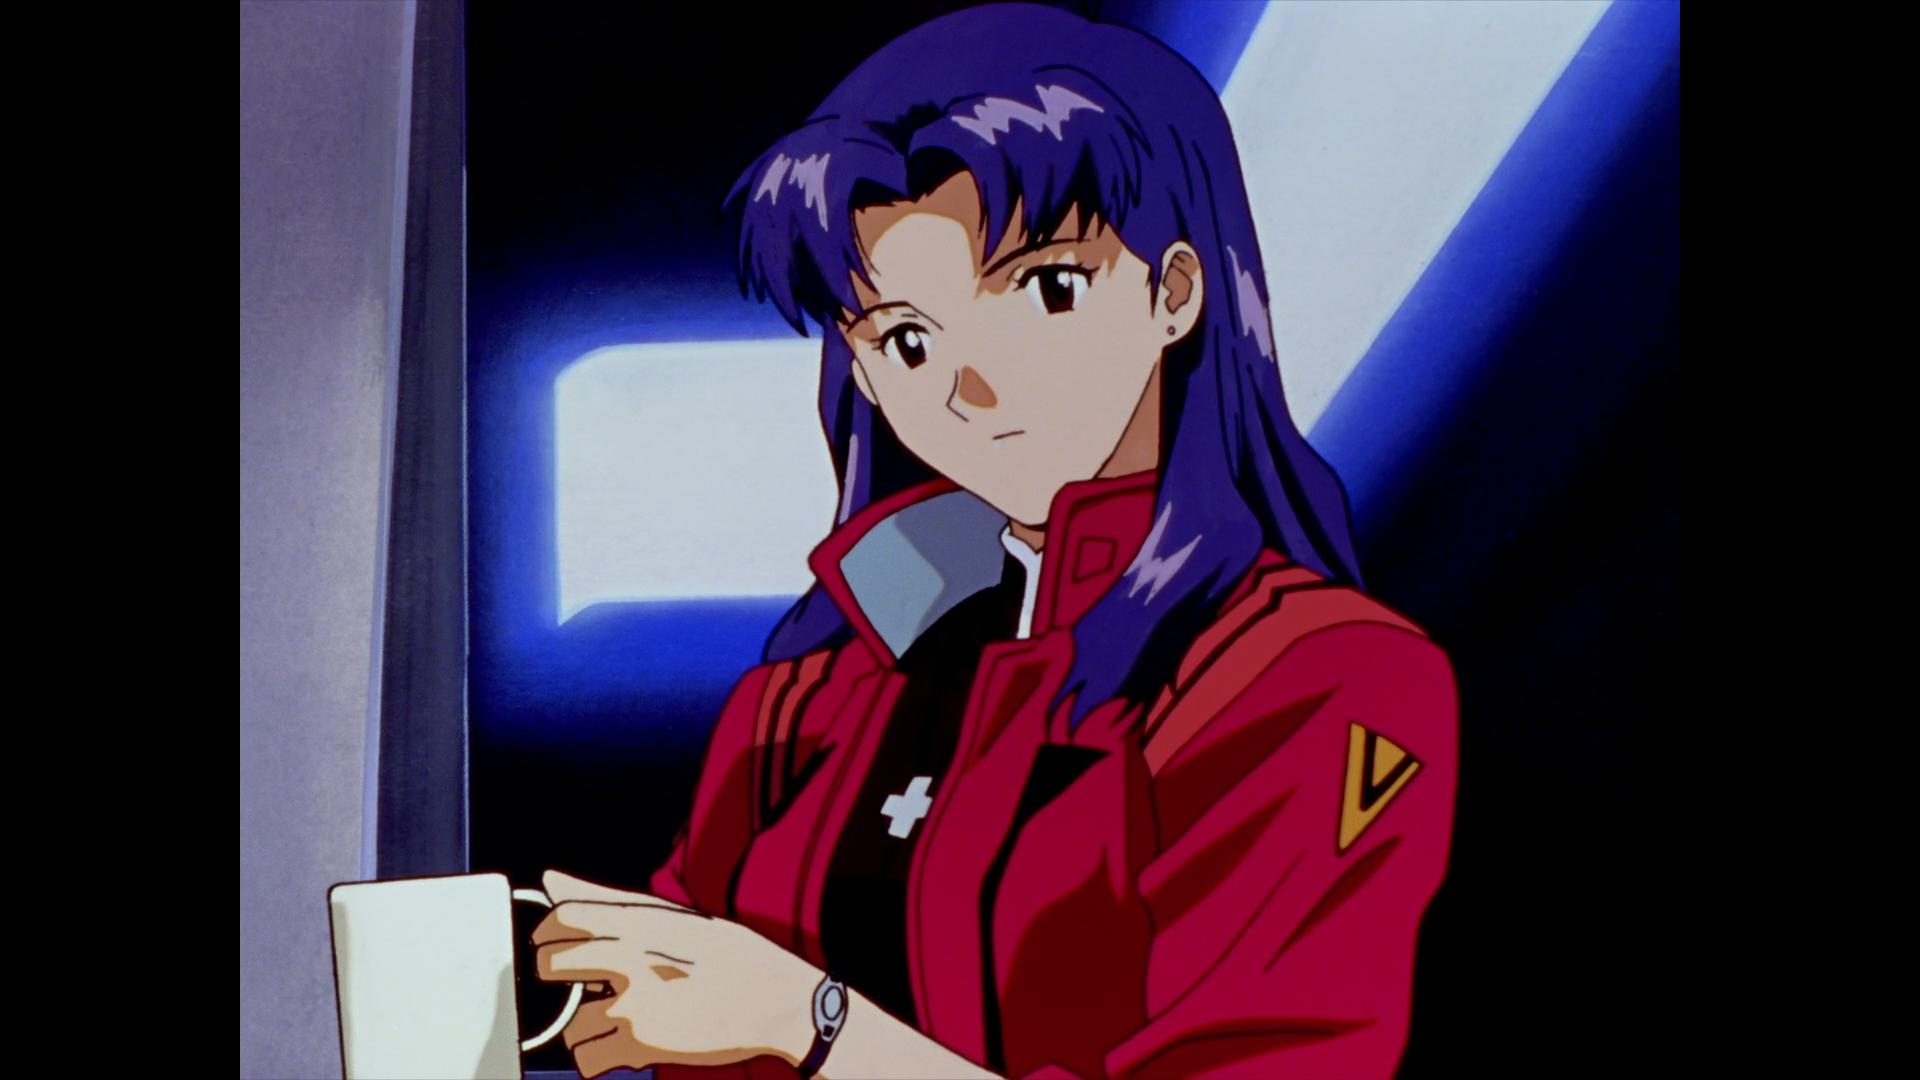 Misato Katsuragi - Neon Genesis Evangelion (1995)